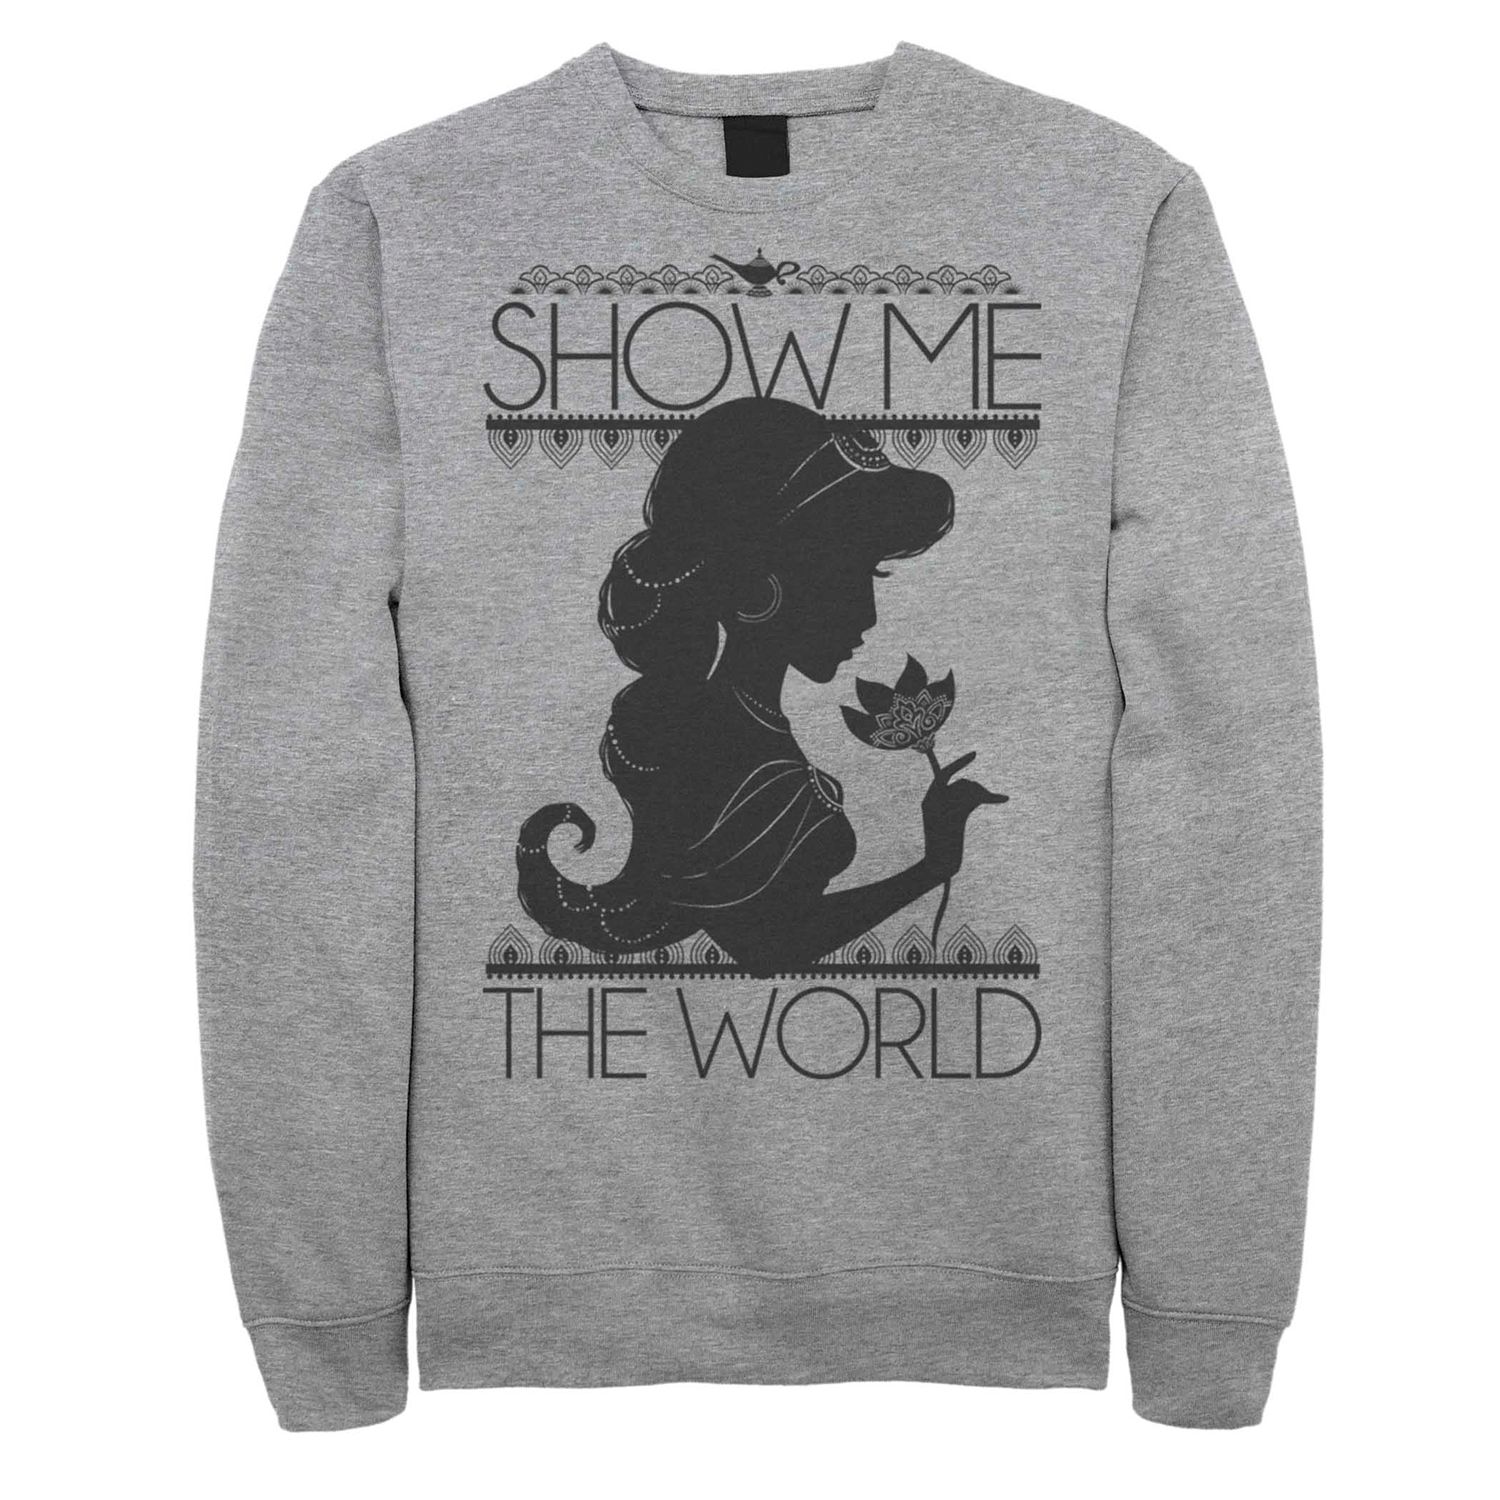 Image for Disney Juniors 's Aladdin Jasmine "Show Me the World" Graphic Sweatshirt at Kohl's.